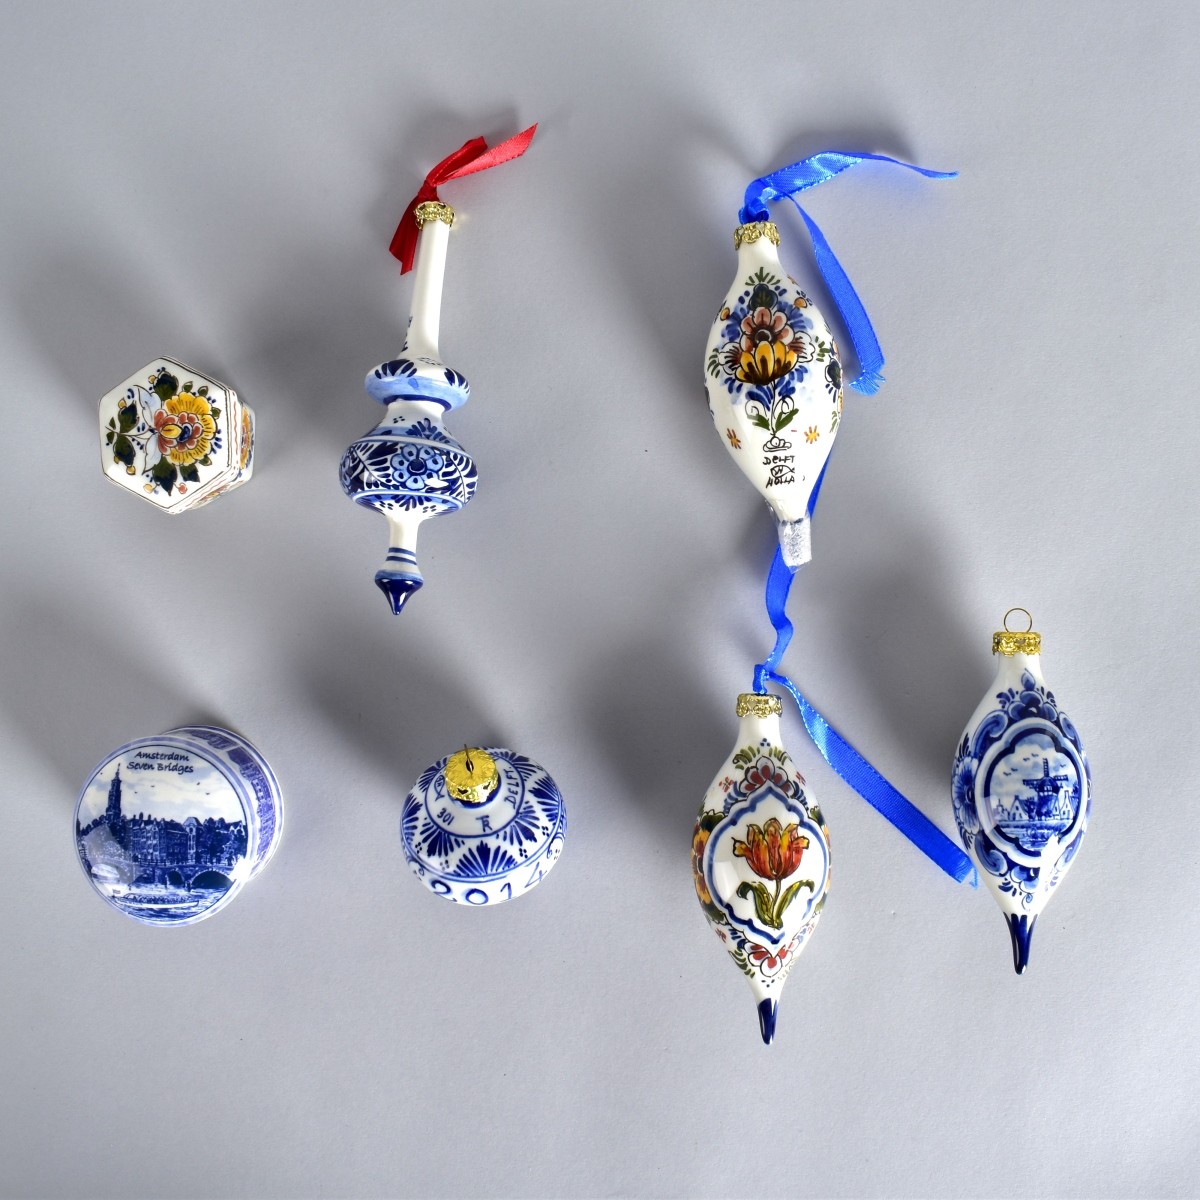 Seven Vintage Delft Ornaments and Trinket Boxes